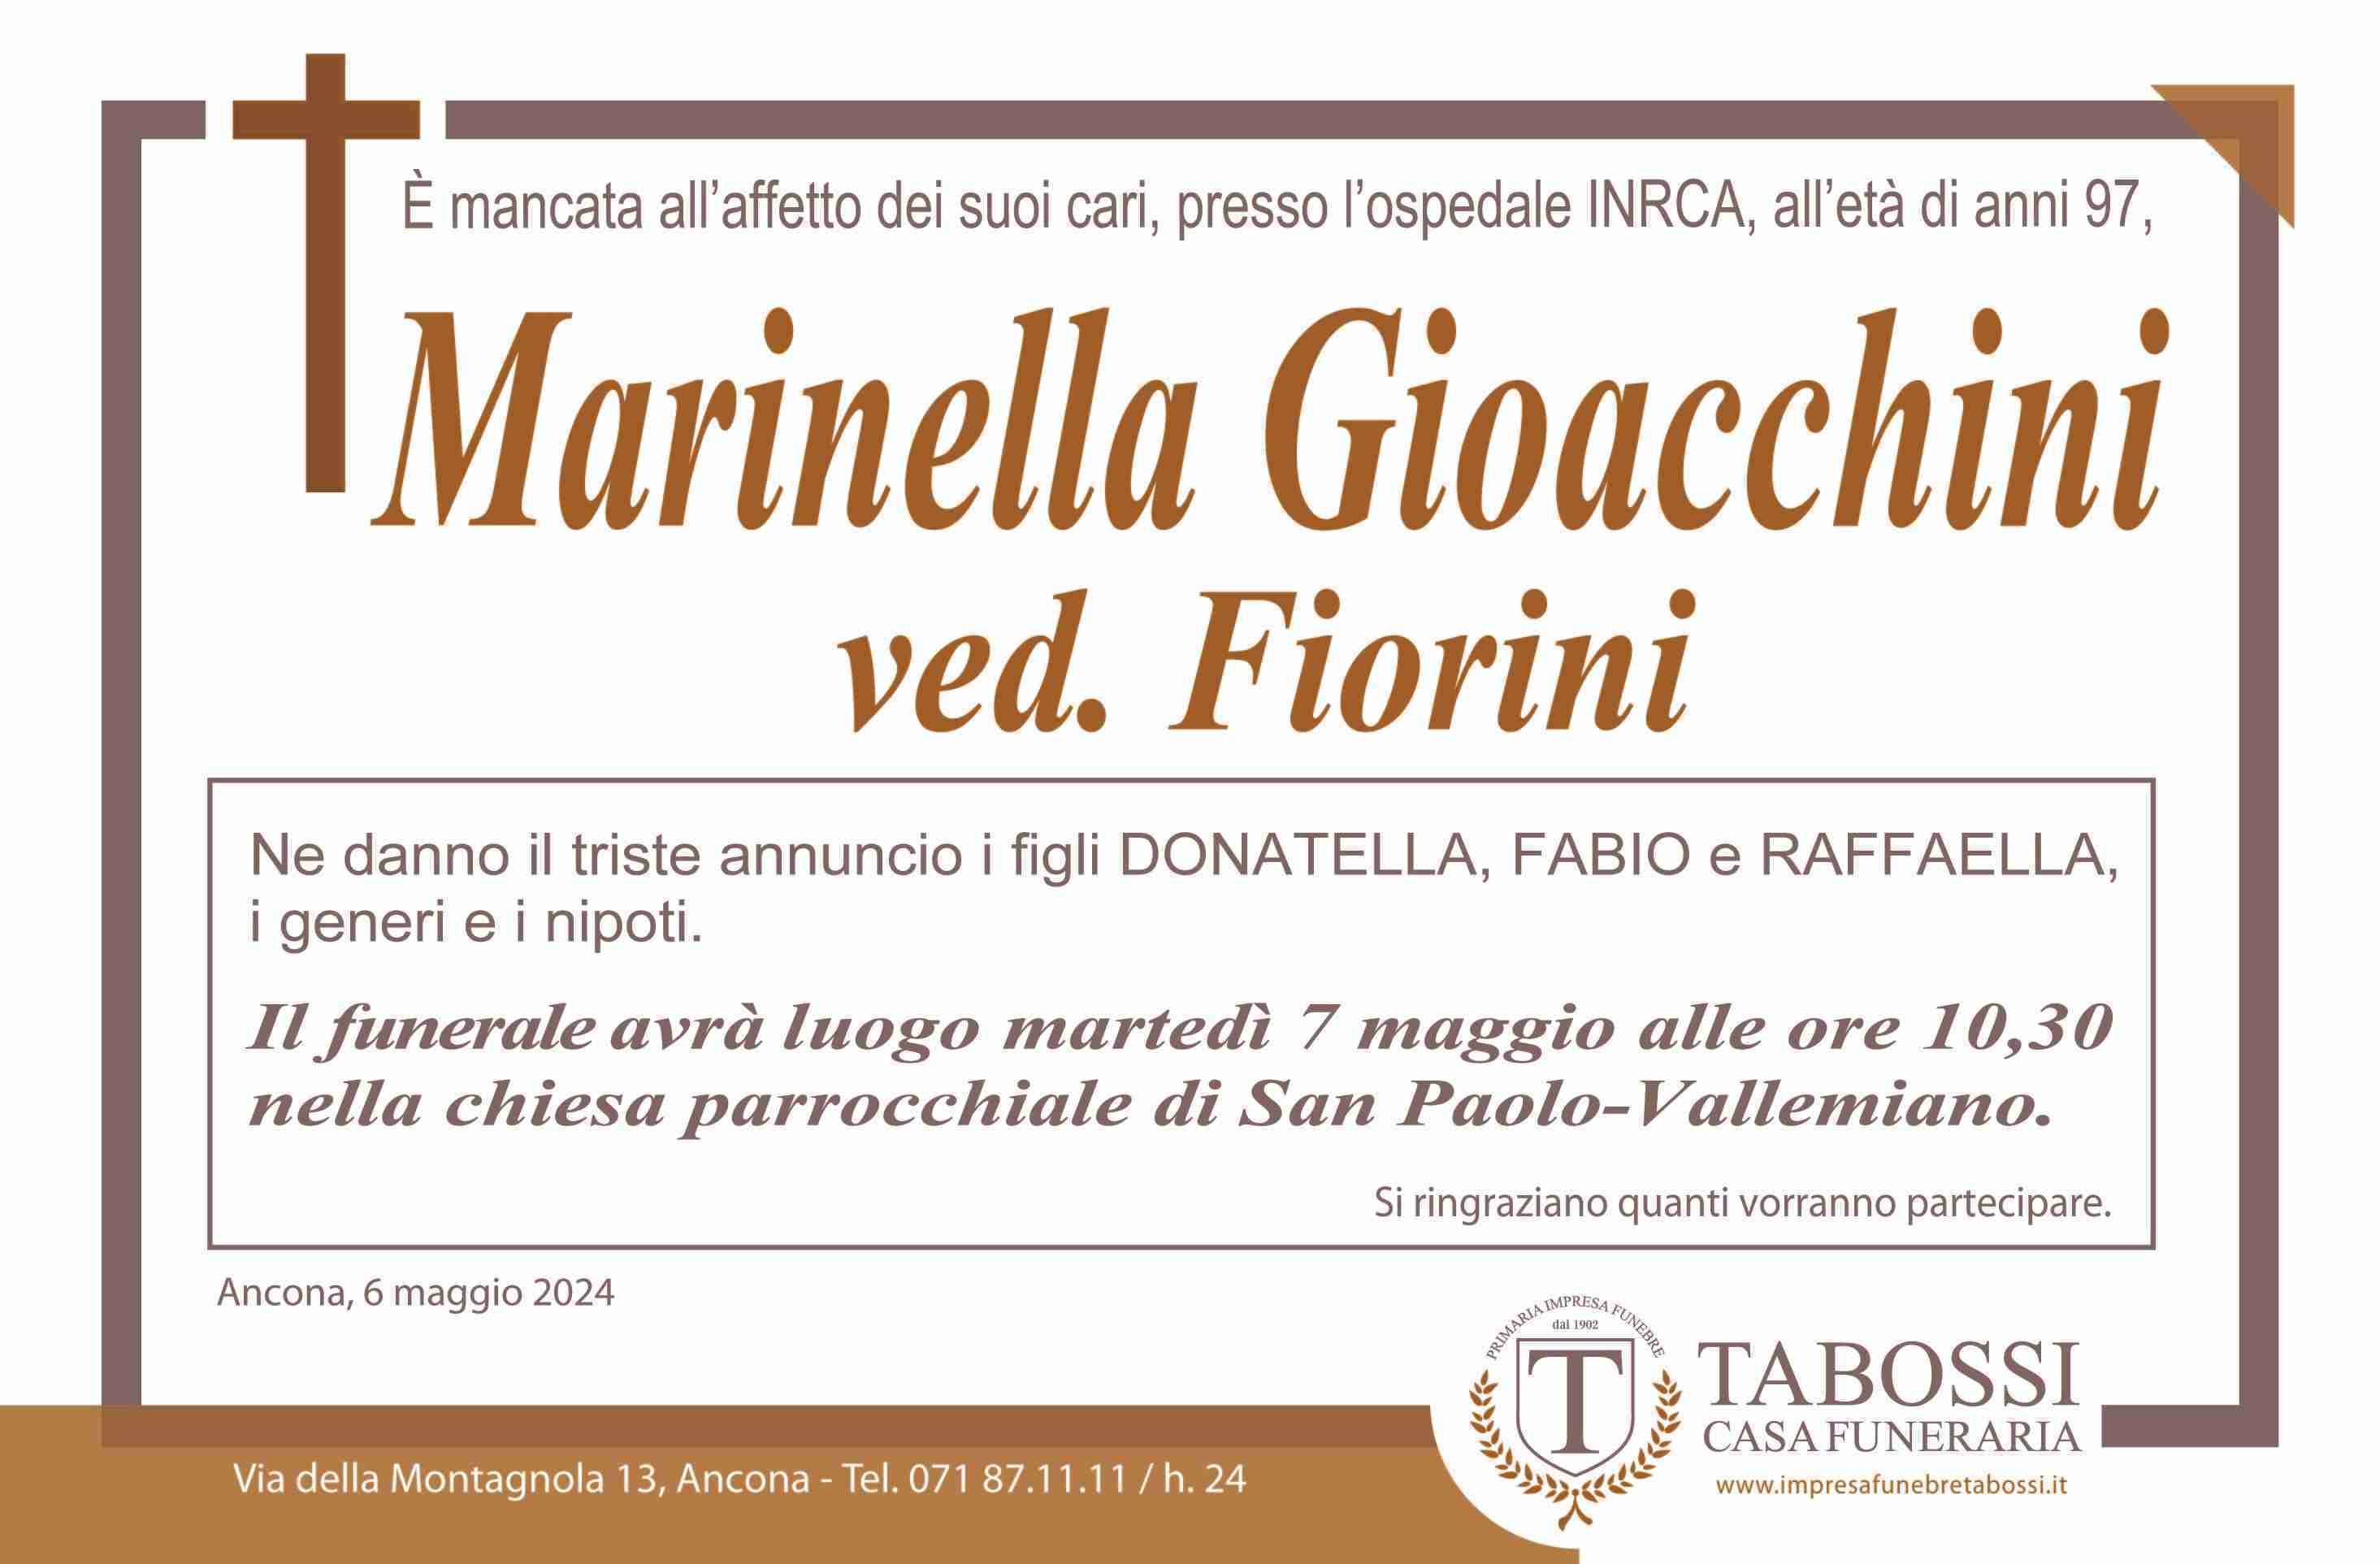 Marinella Gioacchini